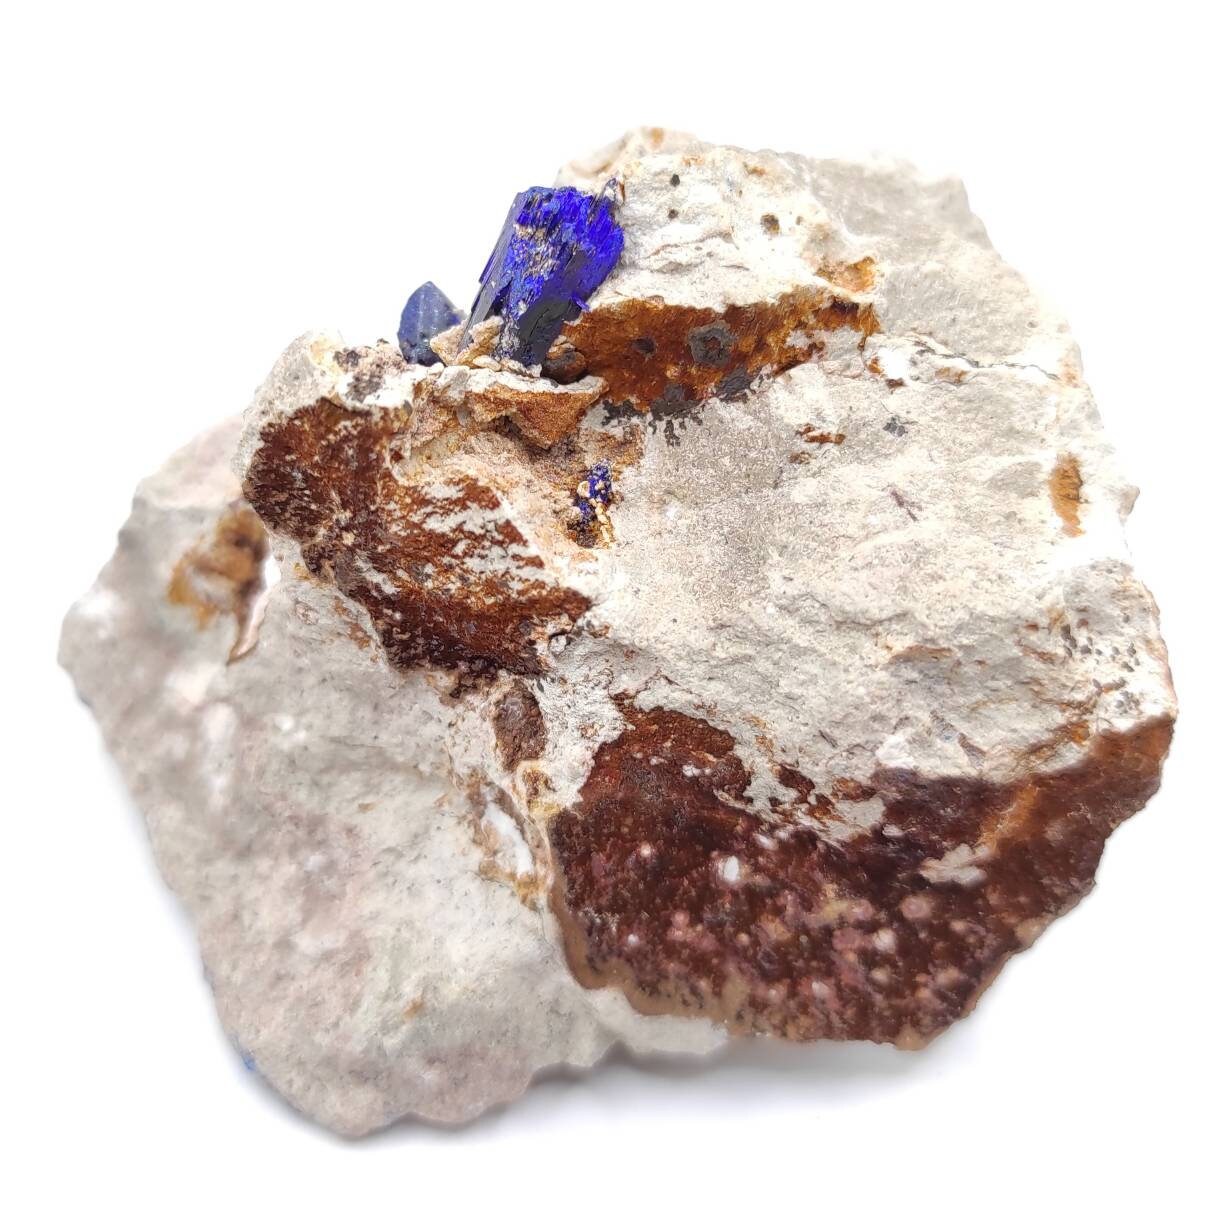 150g Azurite in Matrix - Kerrouchen, Morocco - Blue Azurite Specimen in Matrix - Crystallized Blue Azurite - High Quality Azurite Mineral